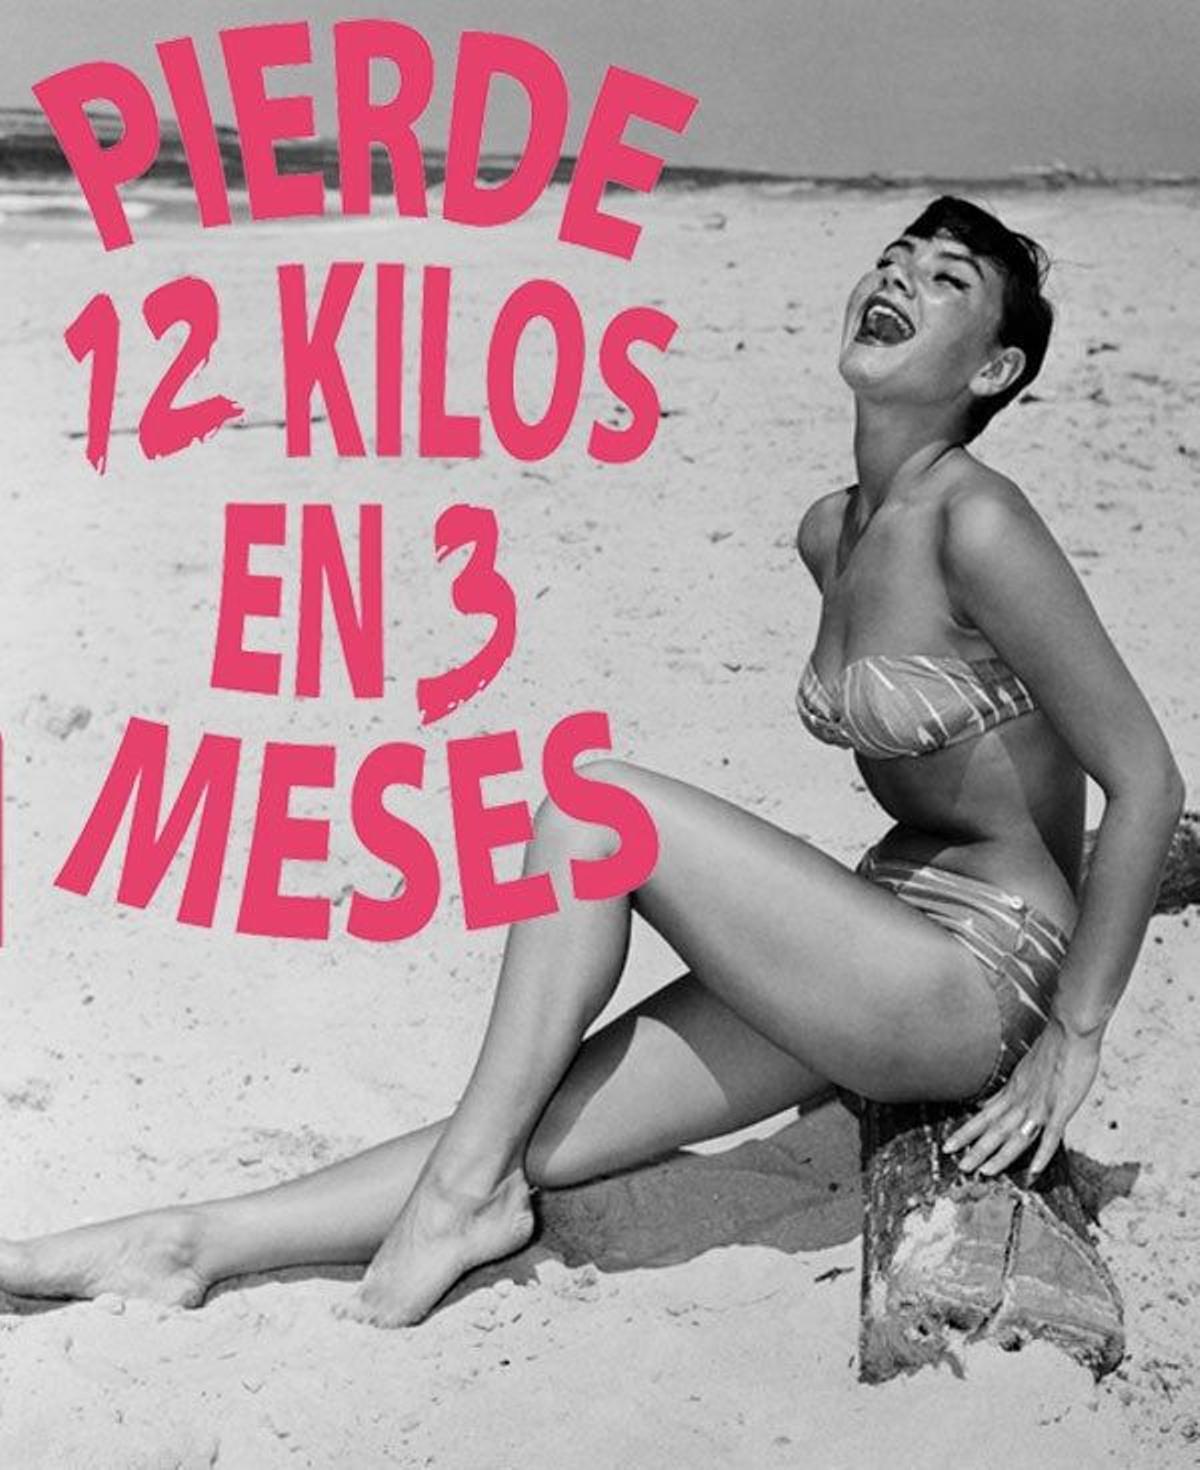 Operación bikini 2015: pierde 12 kilos en 3 meses